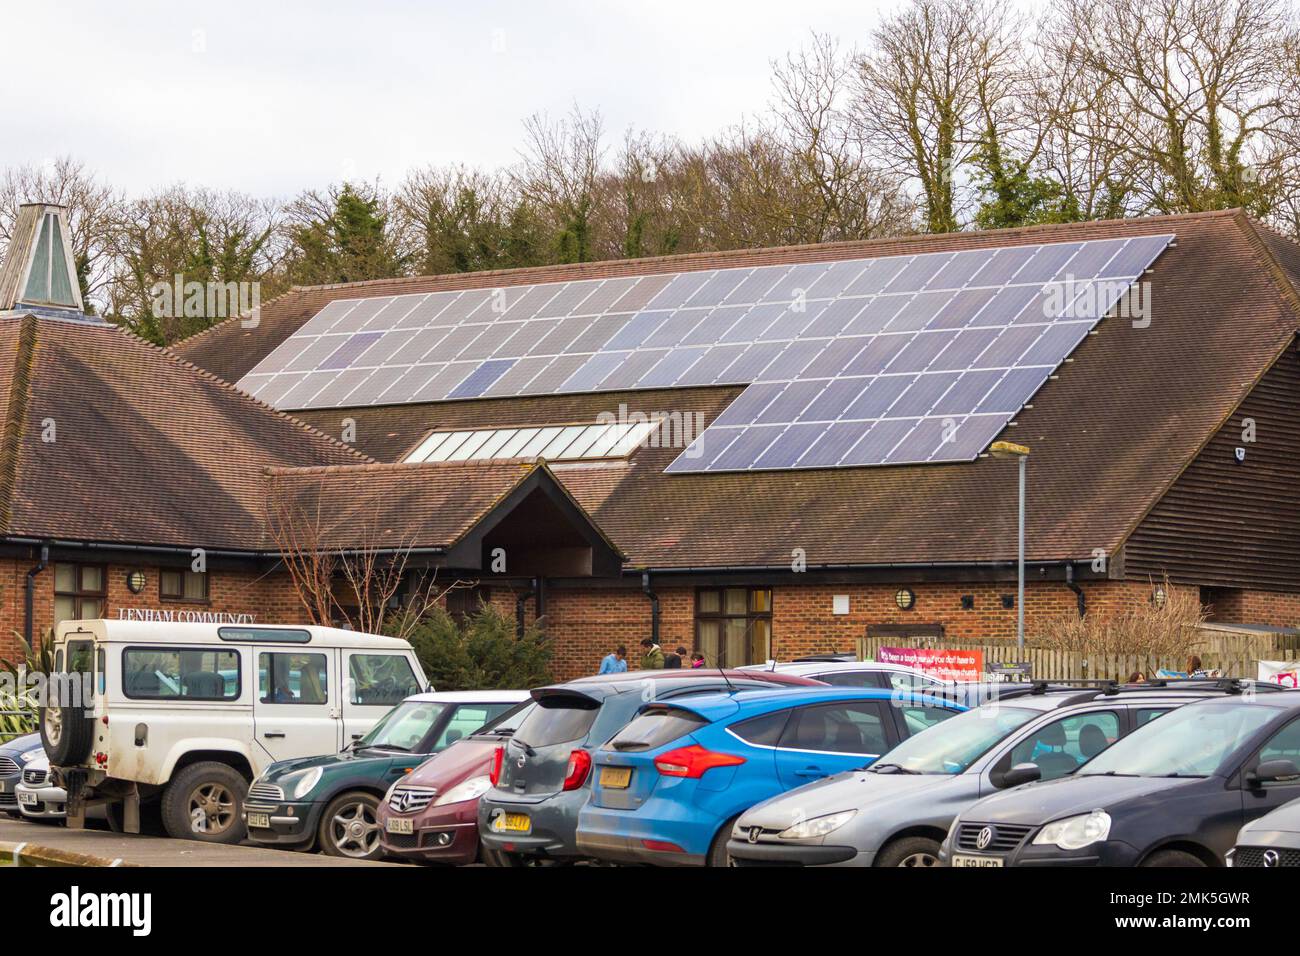 Solar panels on the roof of Lenham community centre, kent, uk Stock Photo